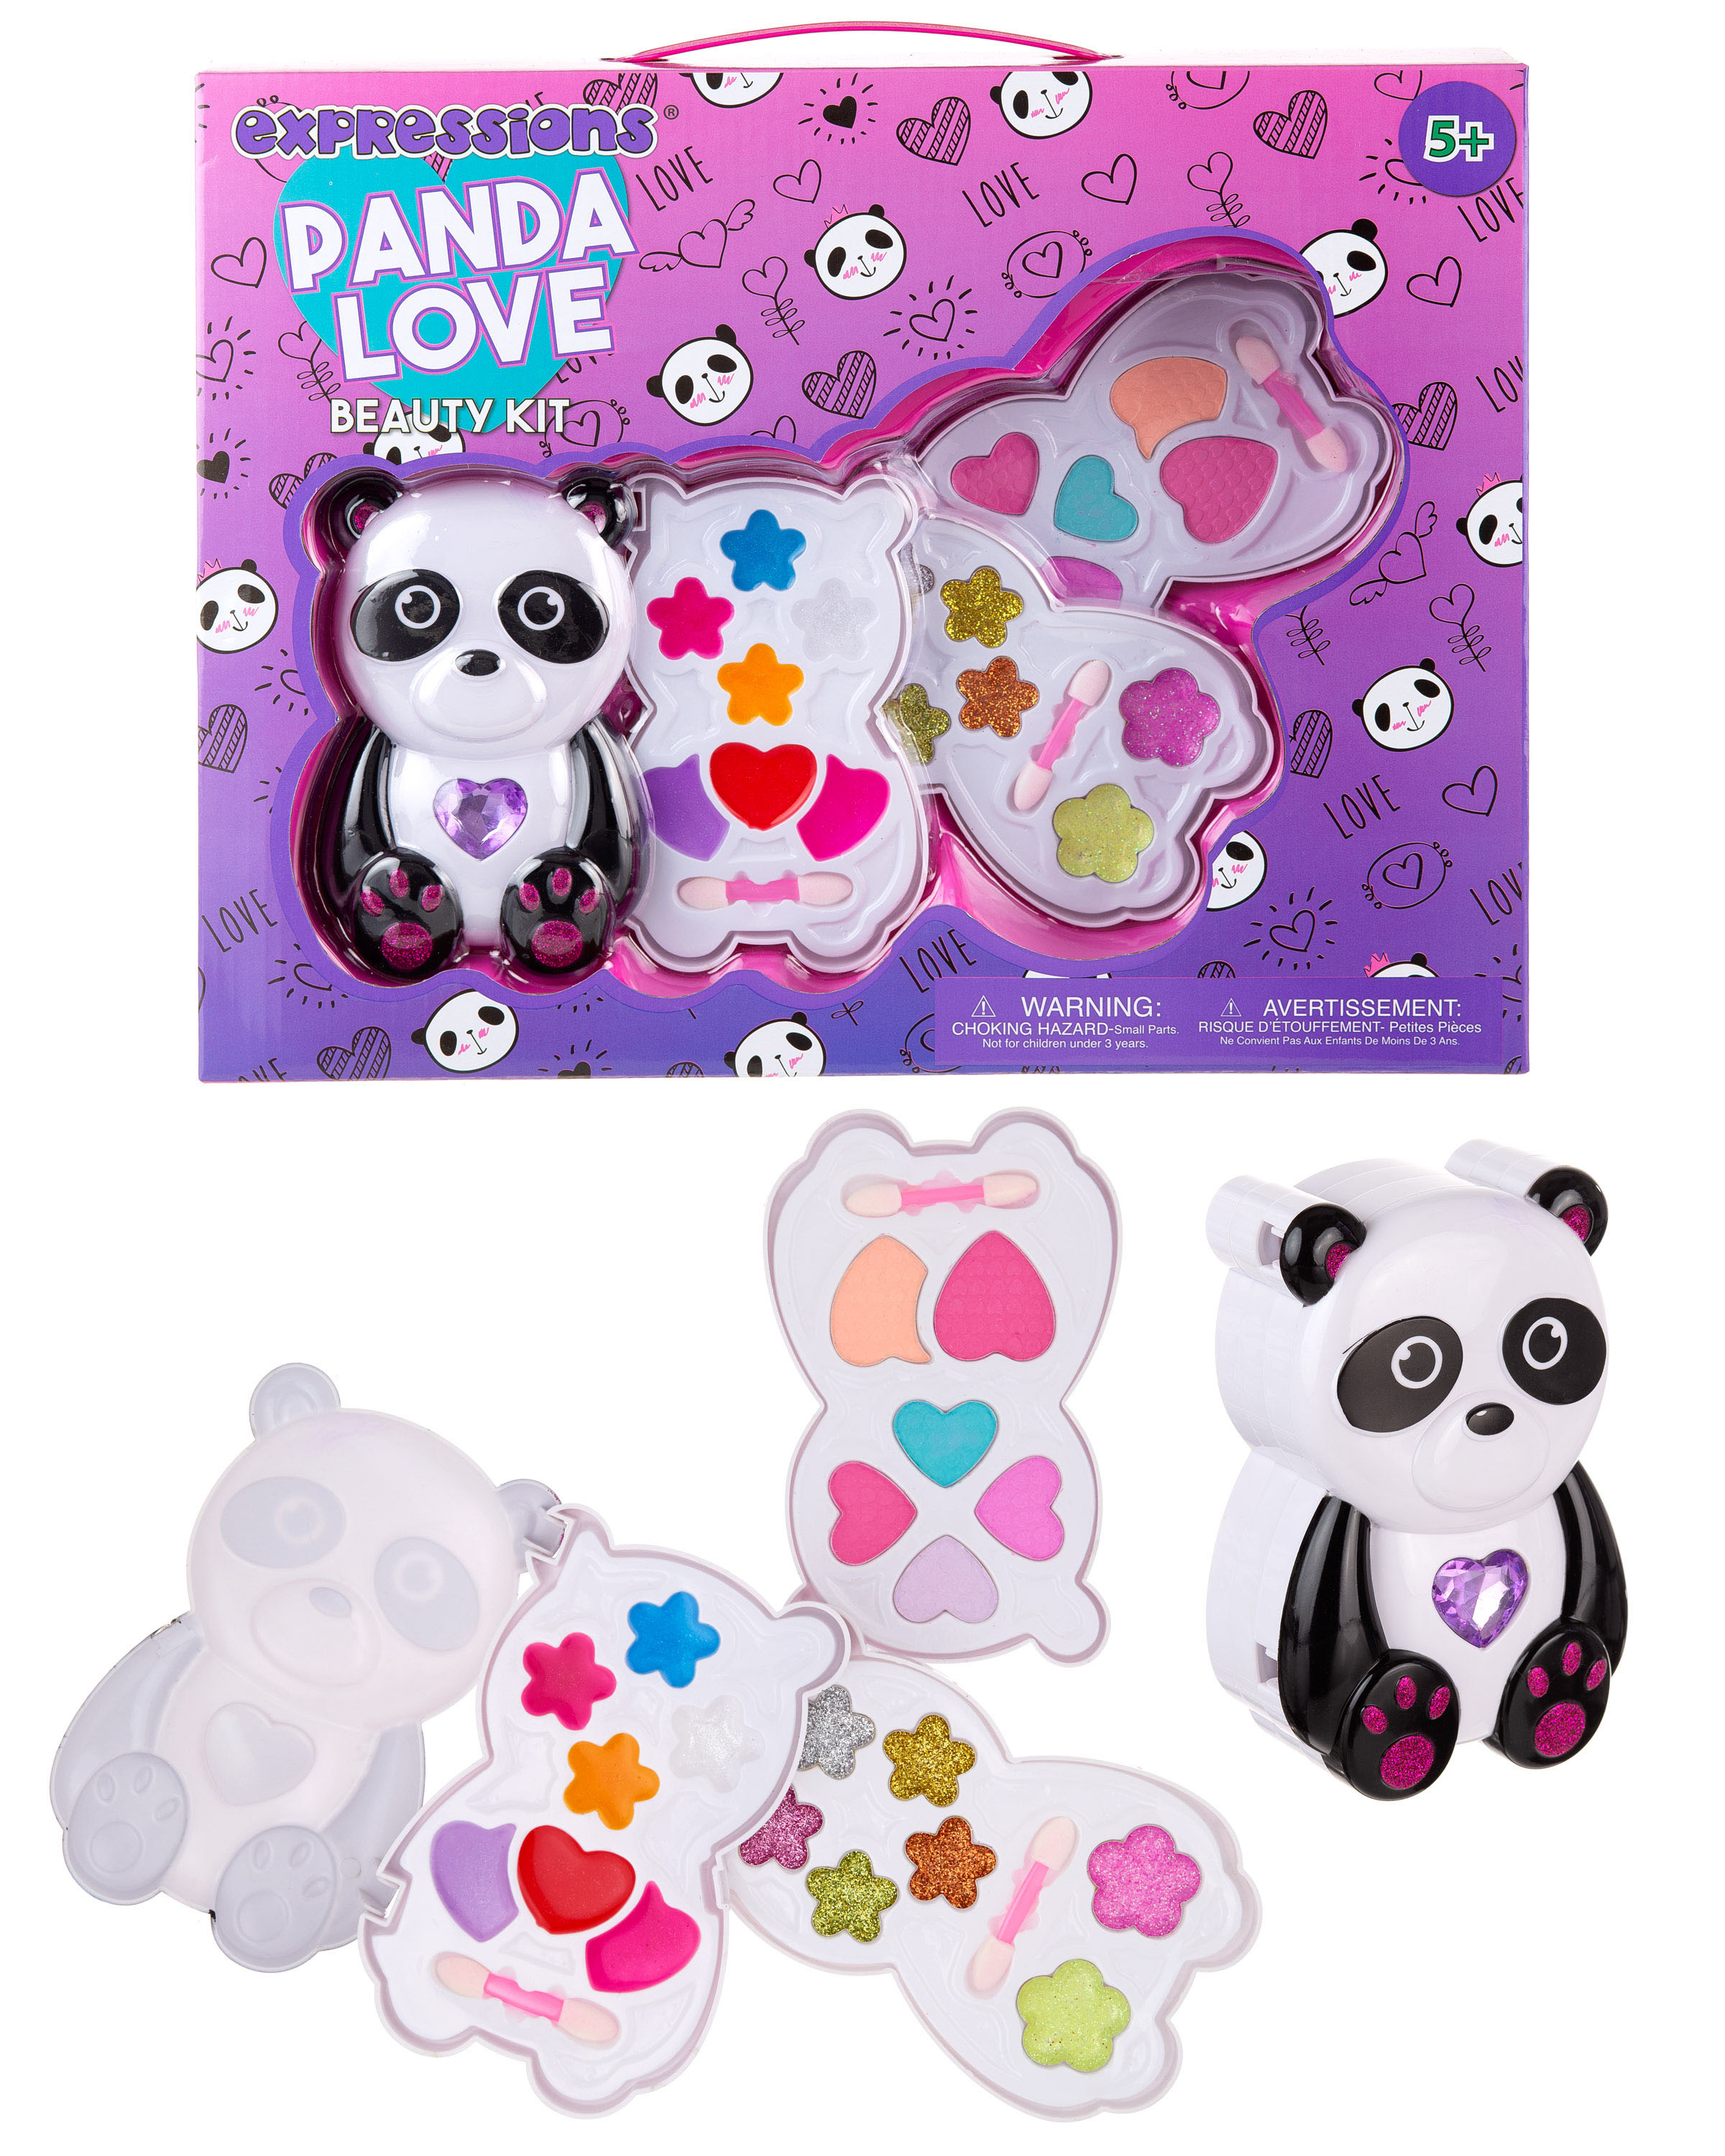 Expressions Make-Up Beauty Kit - Panda Love